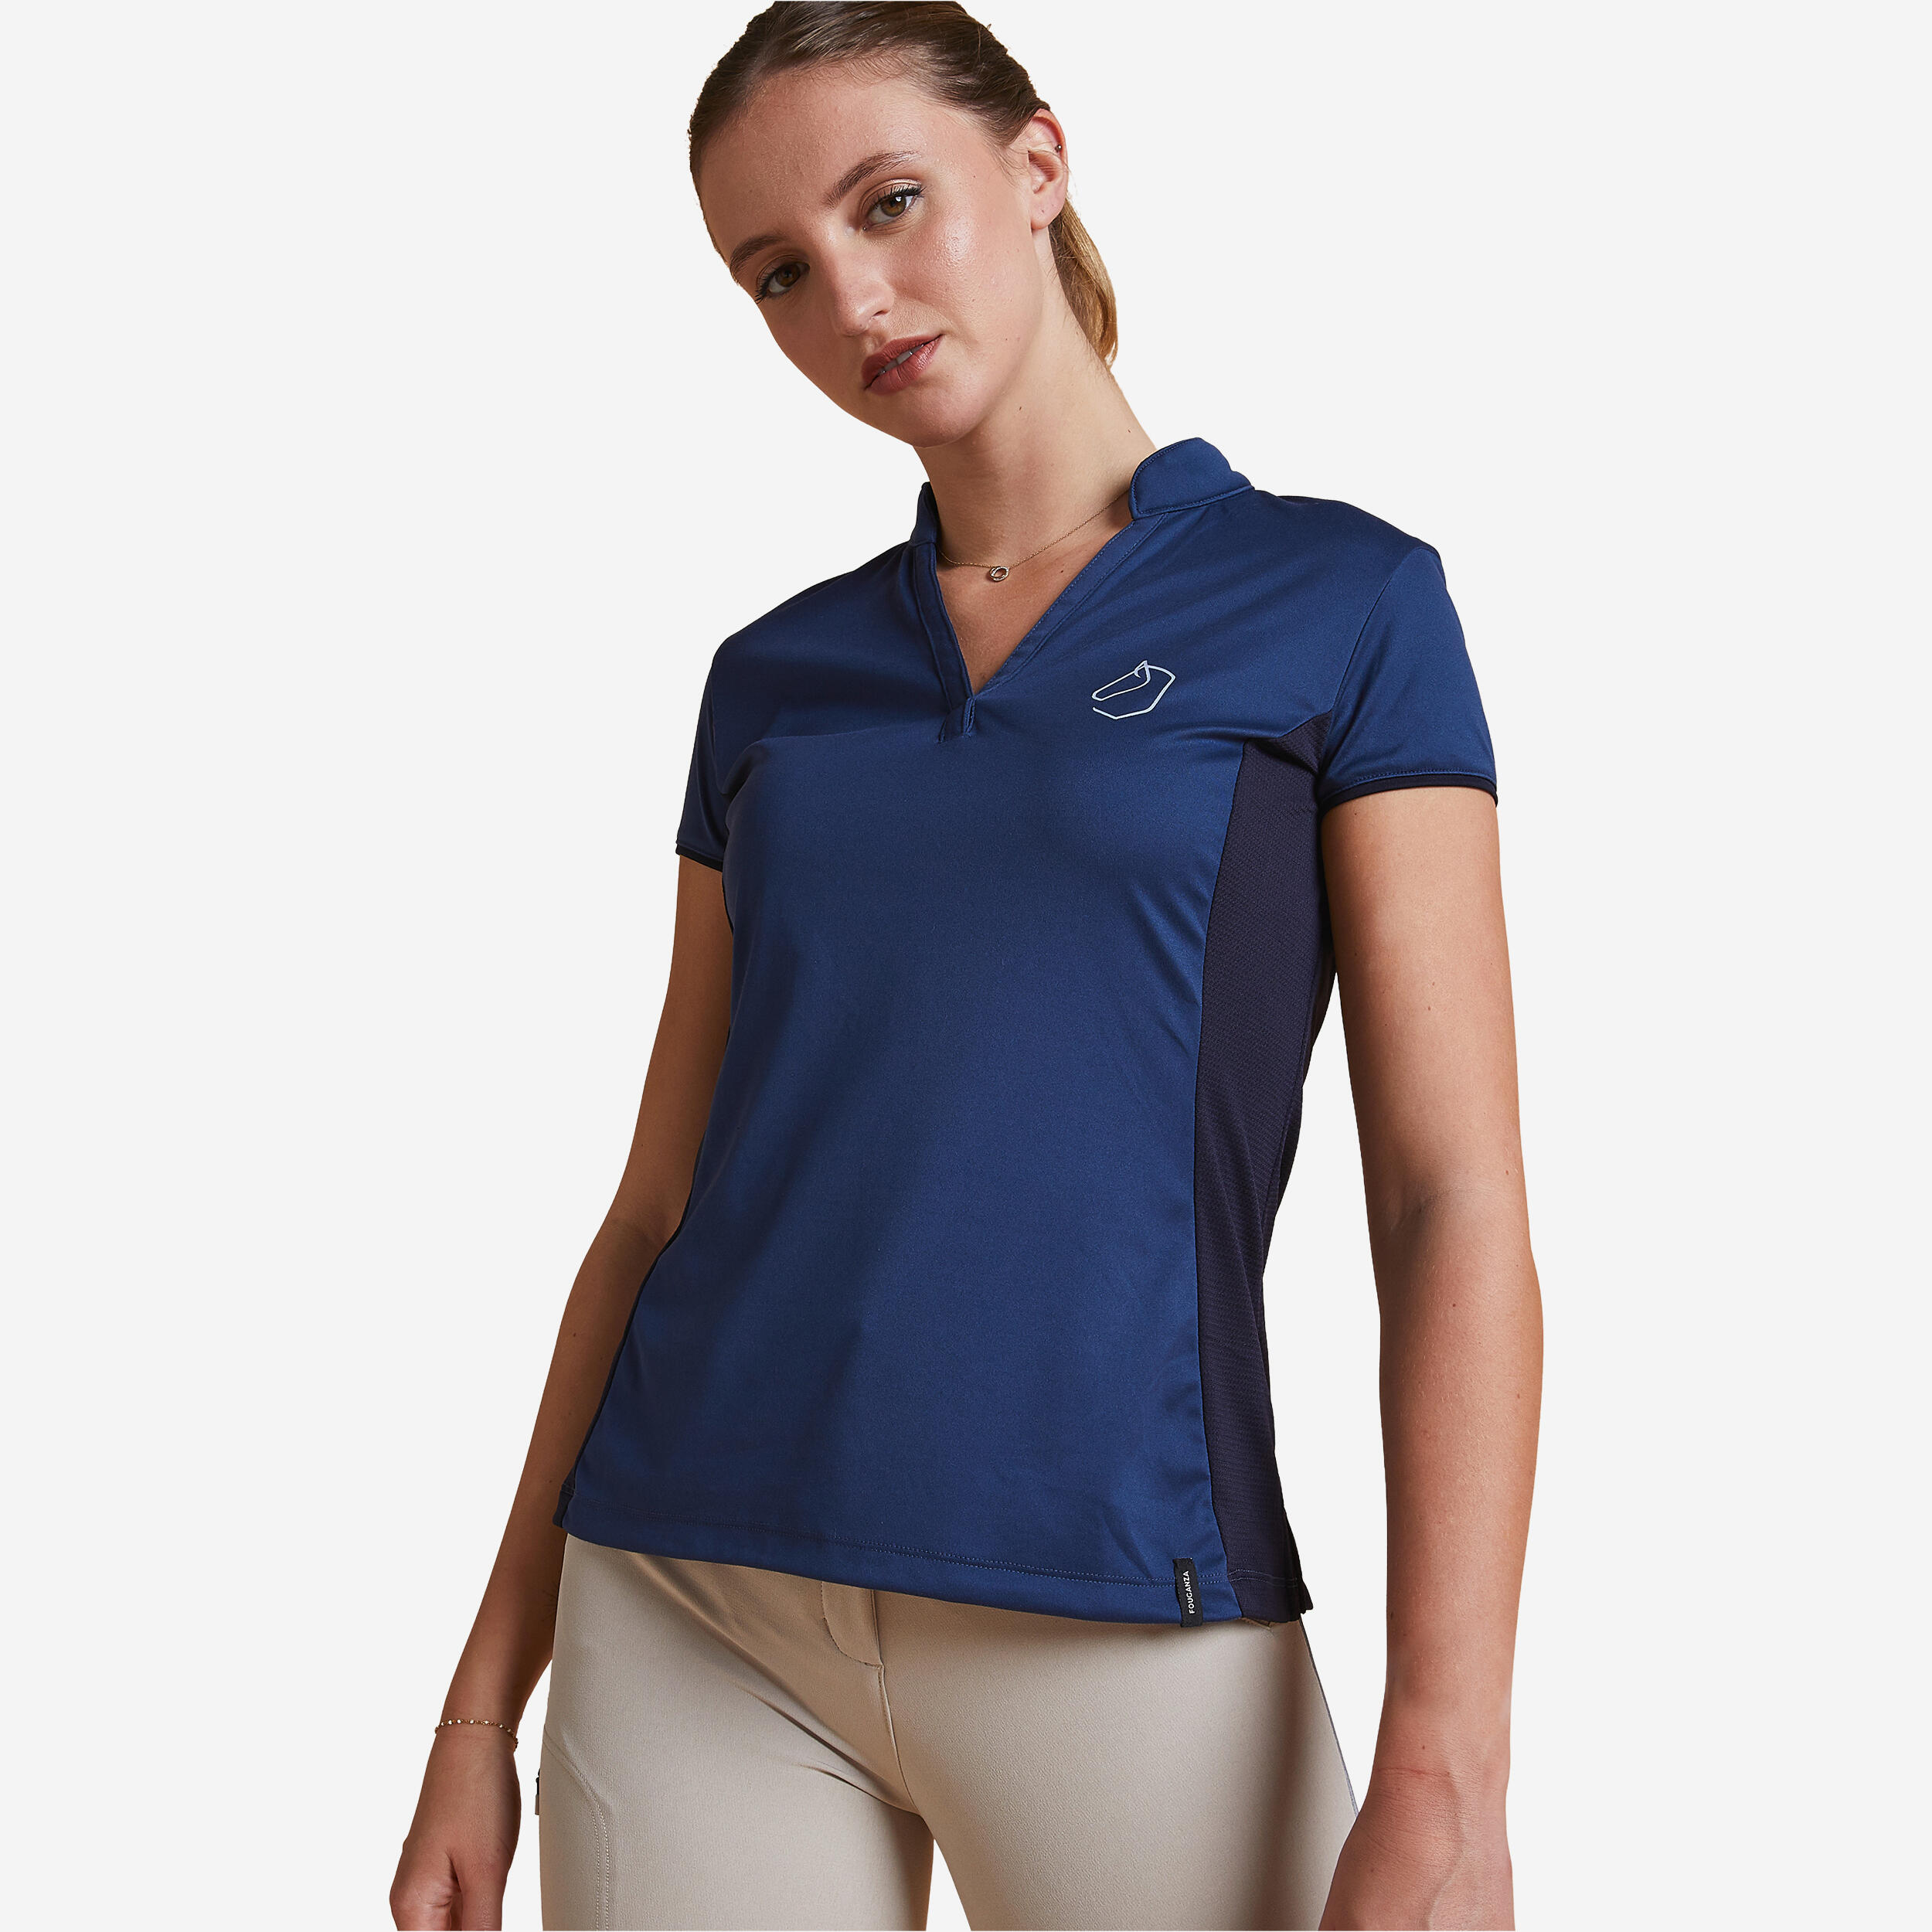 Women's Horse Riding Short-Sleeved Mesh Polo Shirt 500 - Slate Blue - FOUGANZA